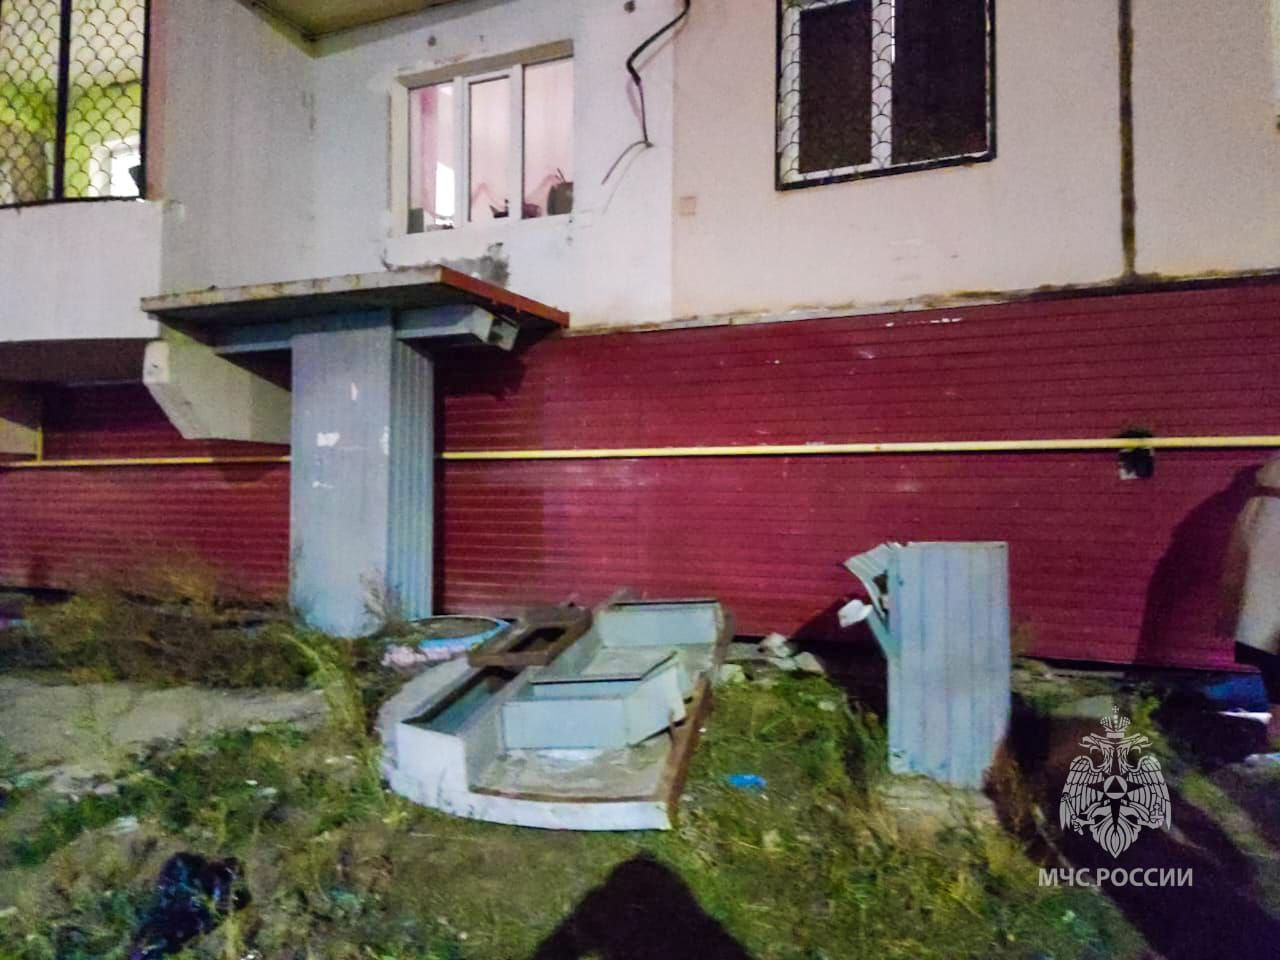 Бетонная плита упала на детей в Якутске. Один ребенок погиб